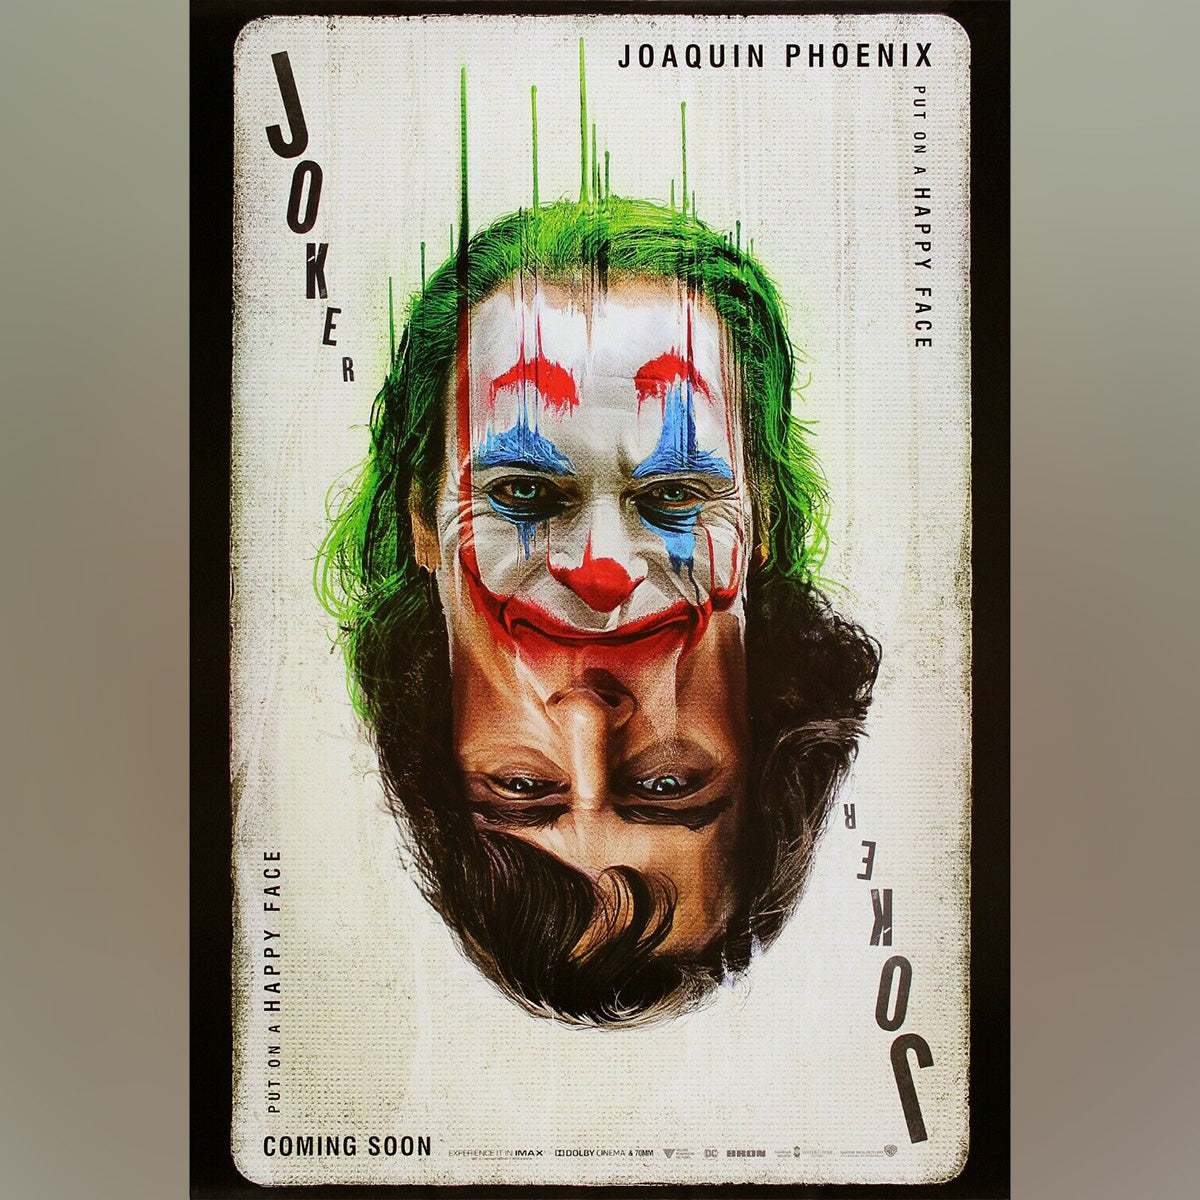 Original Movie Poster of Joker (2019)